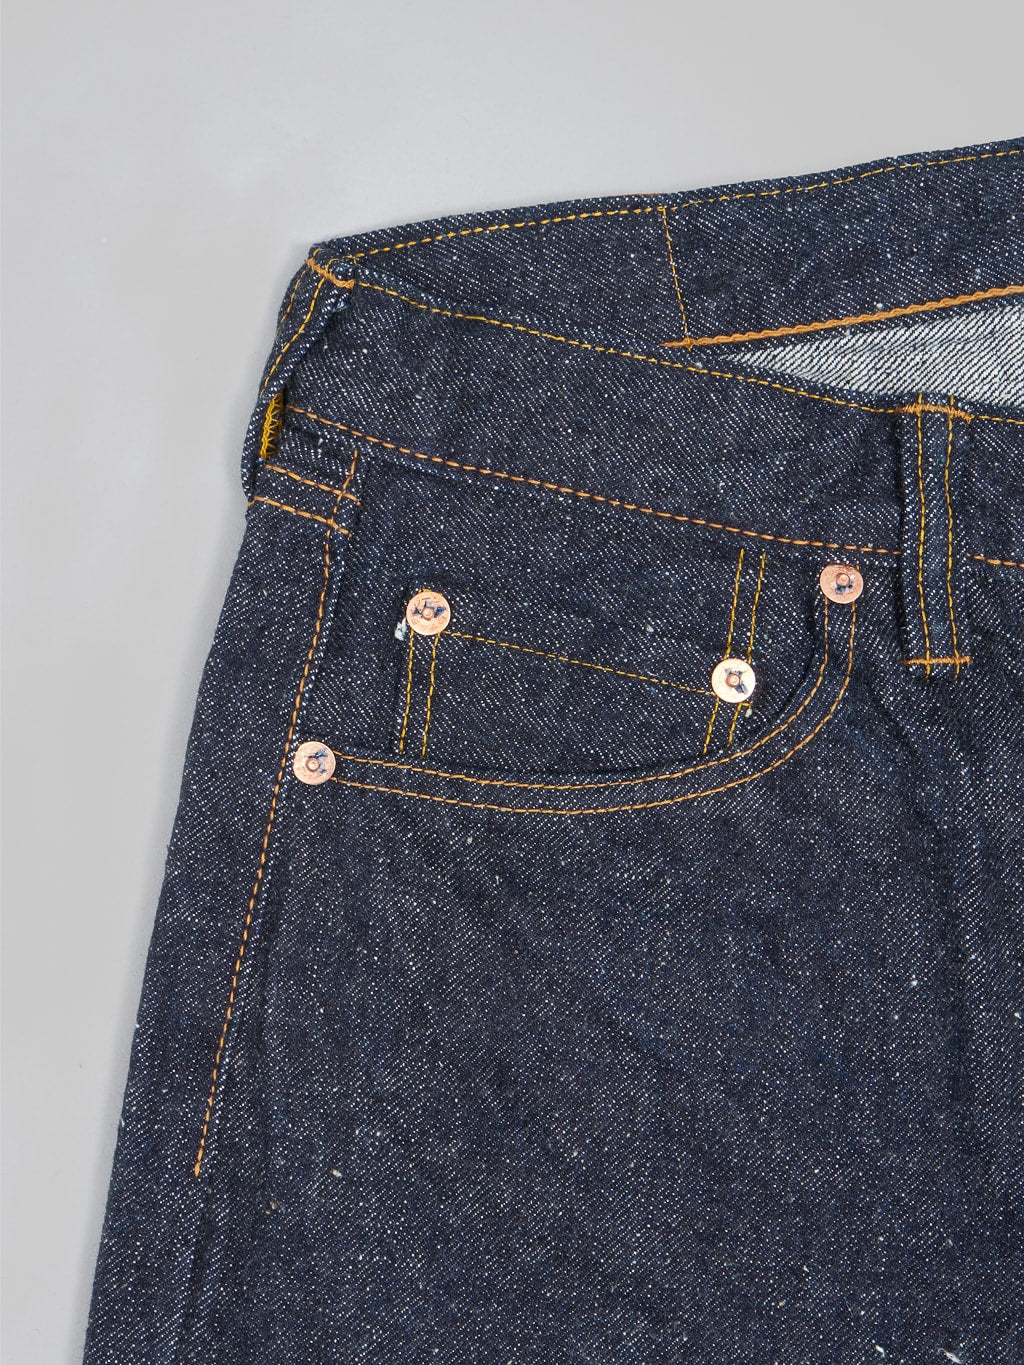 Samurai Jeans S0255XX Ushiwaka 15oz jeans coin pocket